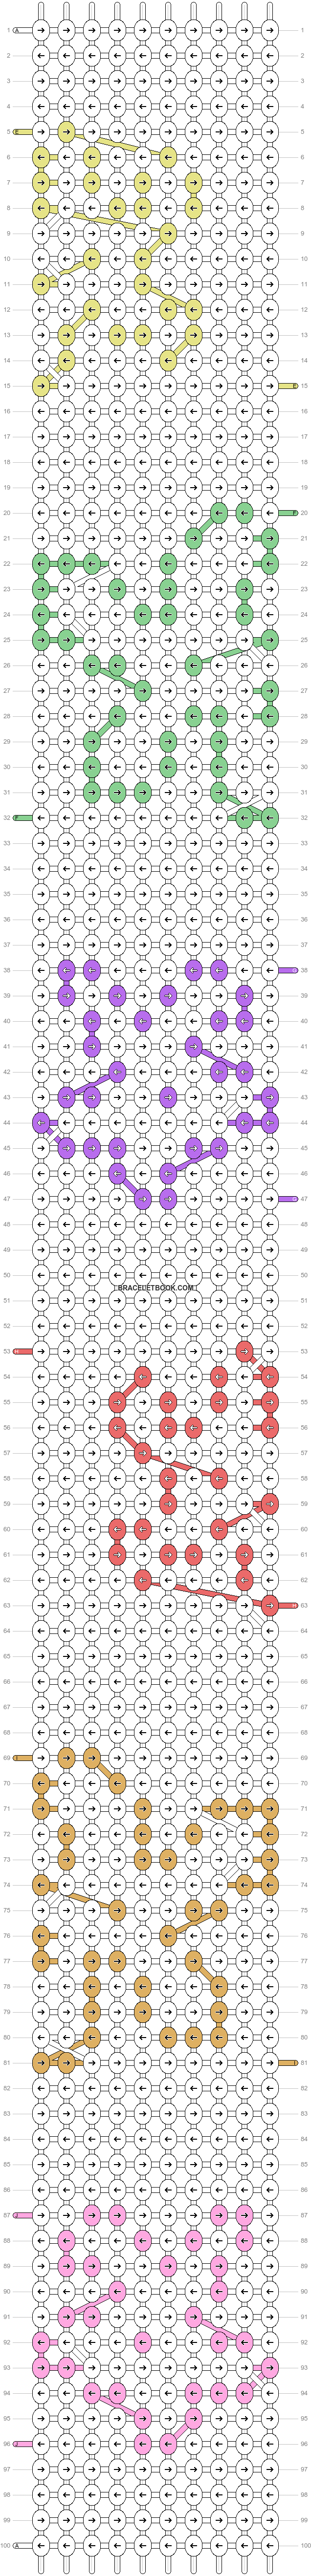 Alpha pattern #51202 variation #81751 pattern